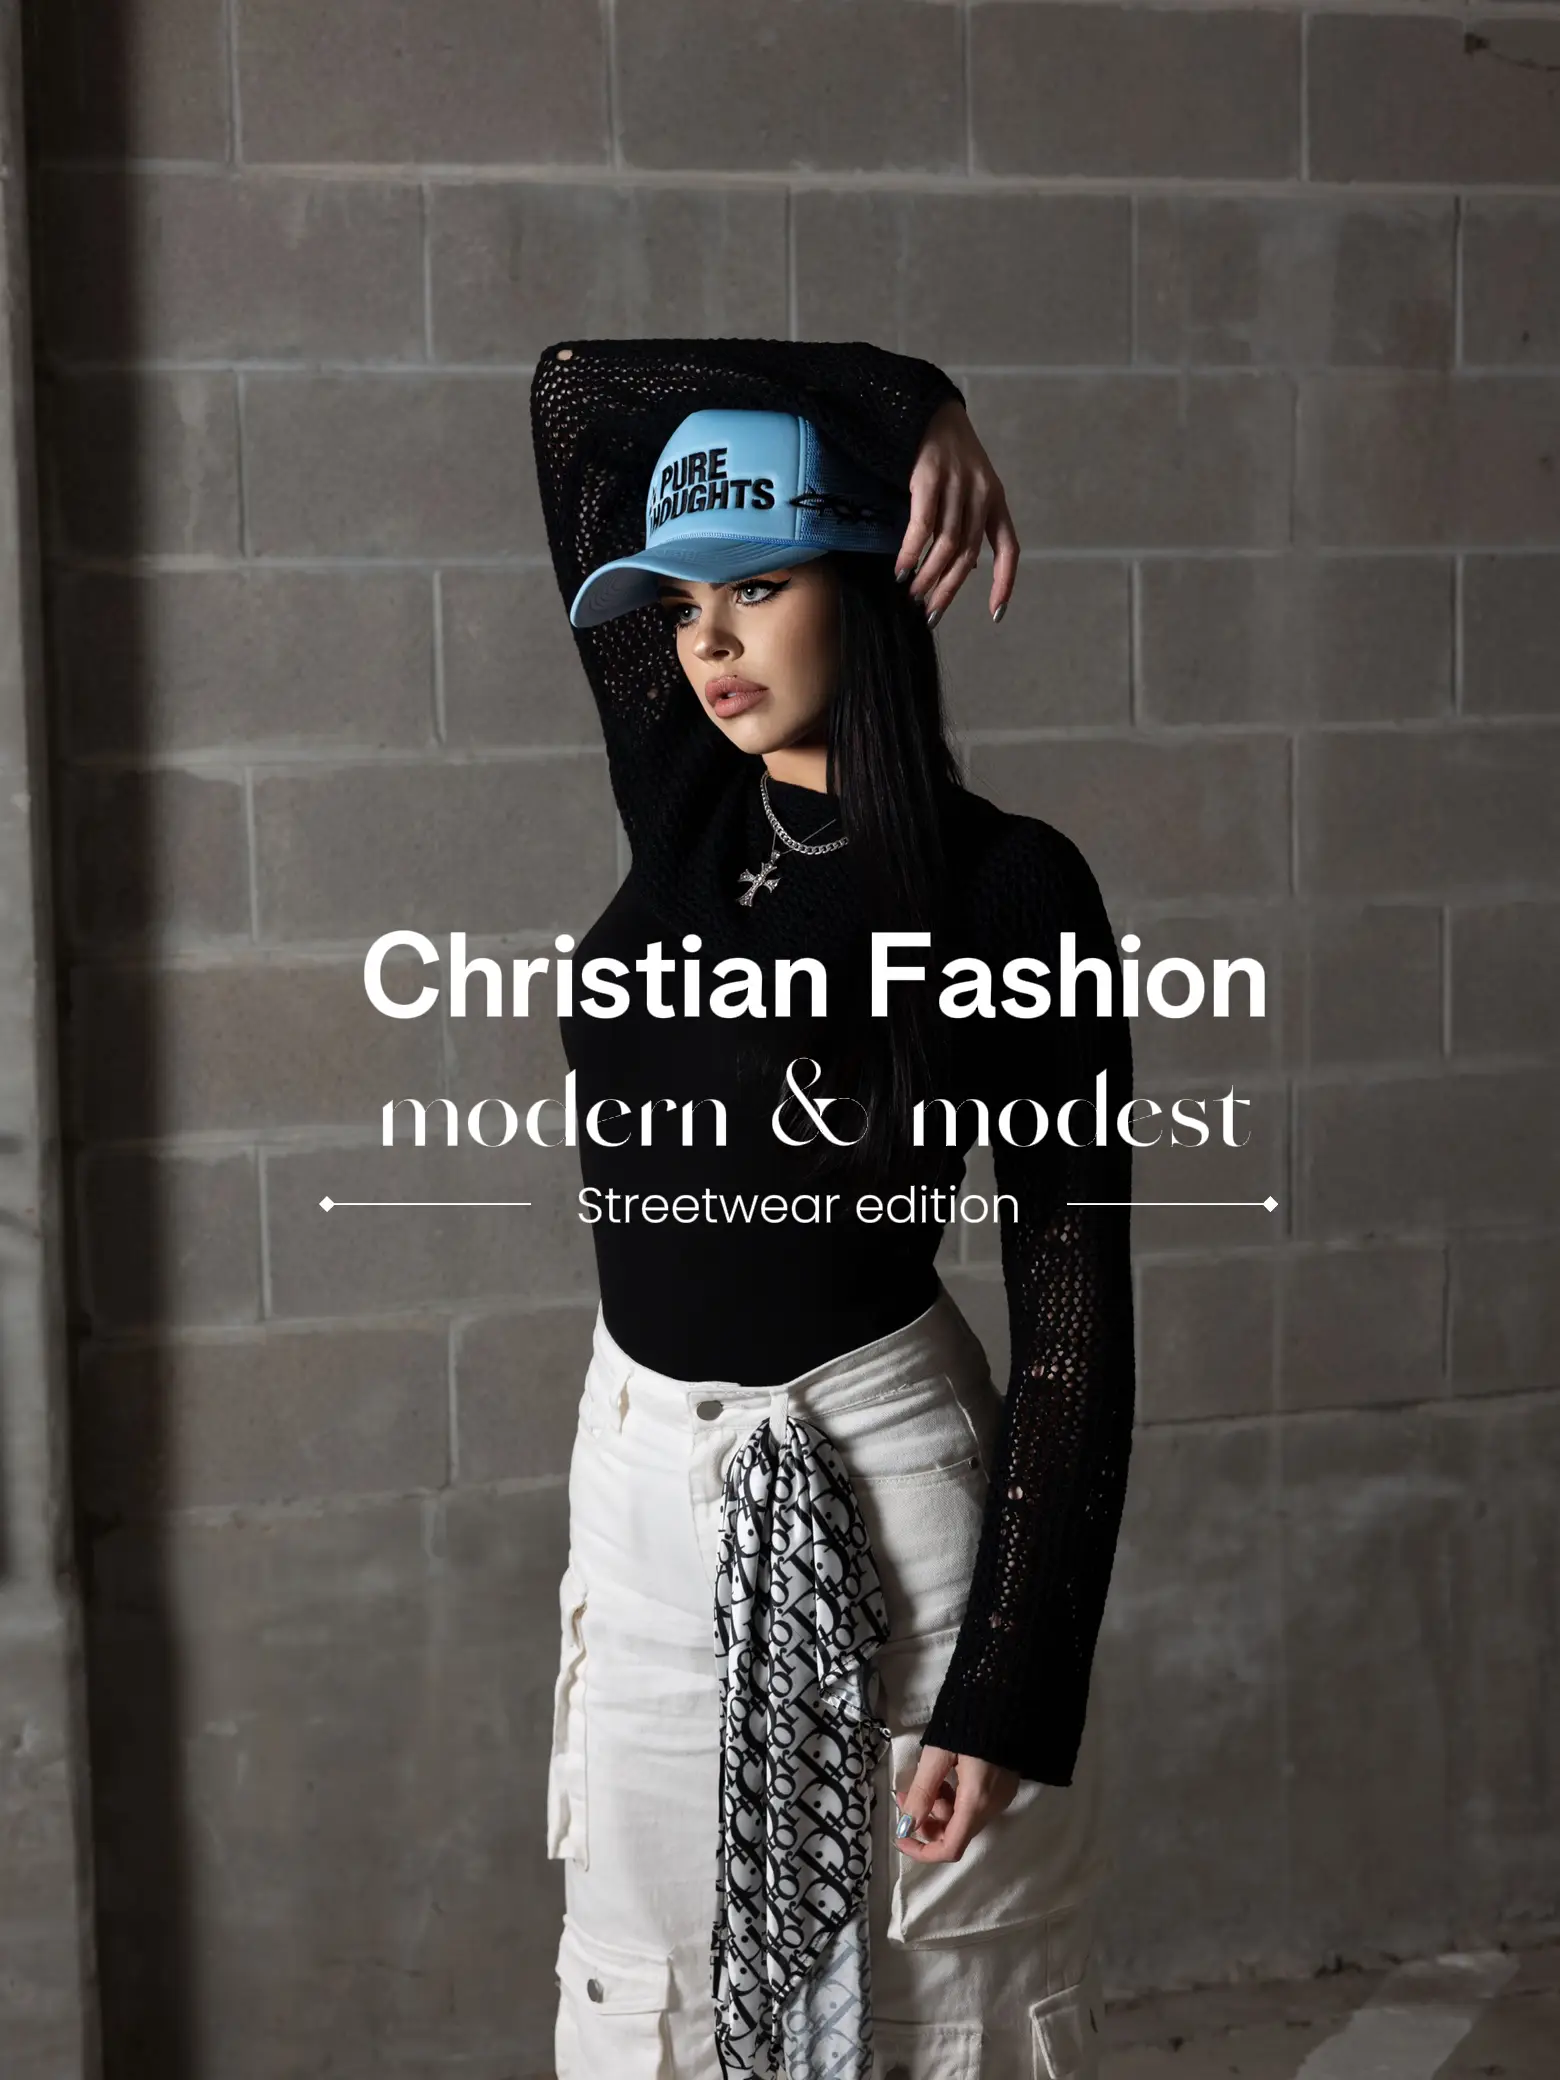 SKIMS and their new adaptive fashion line! 🌼 #fashion